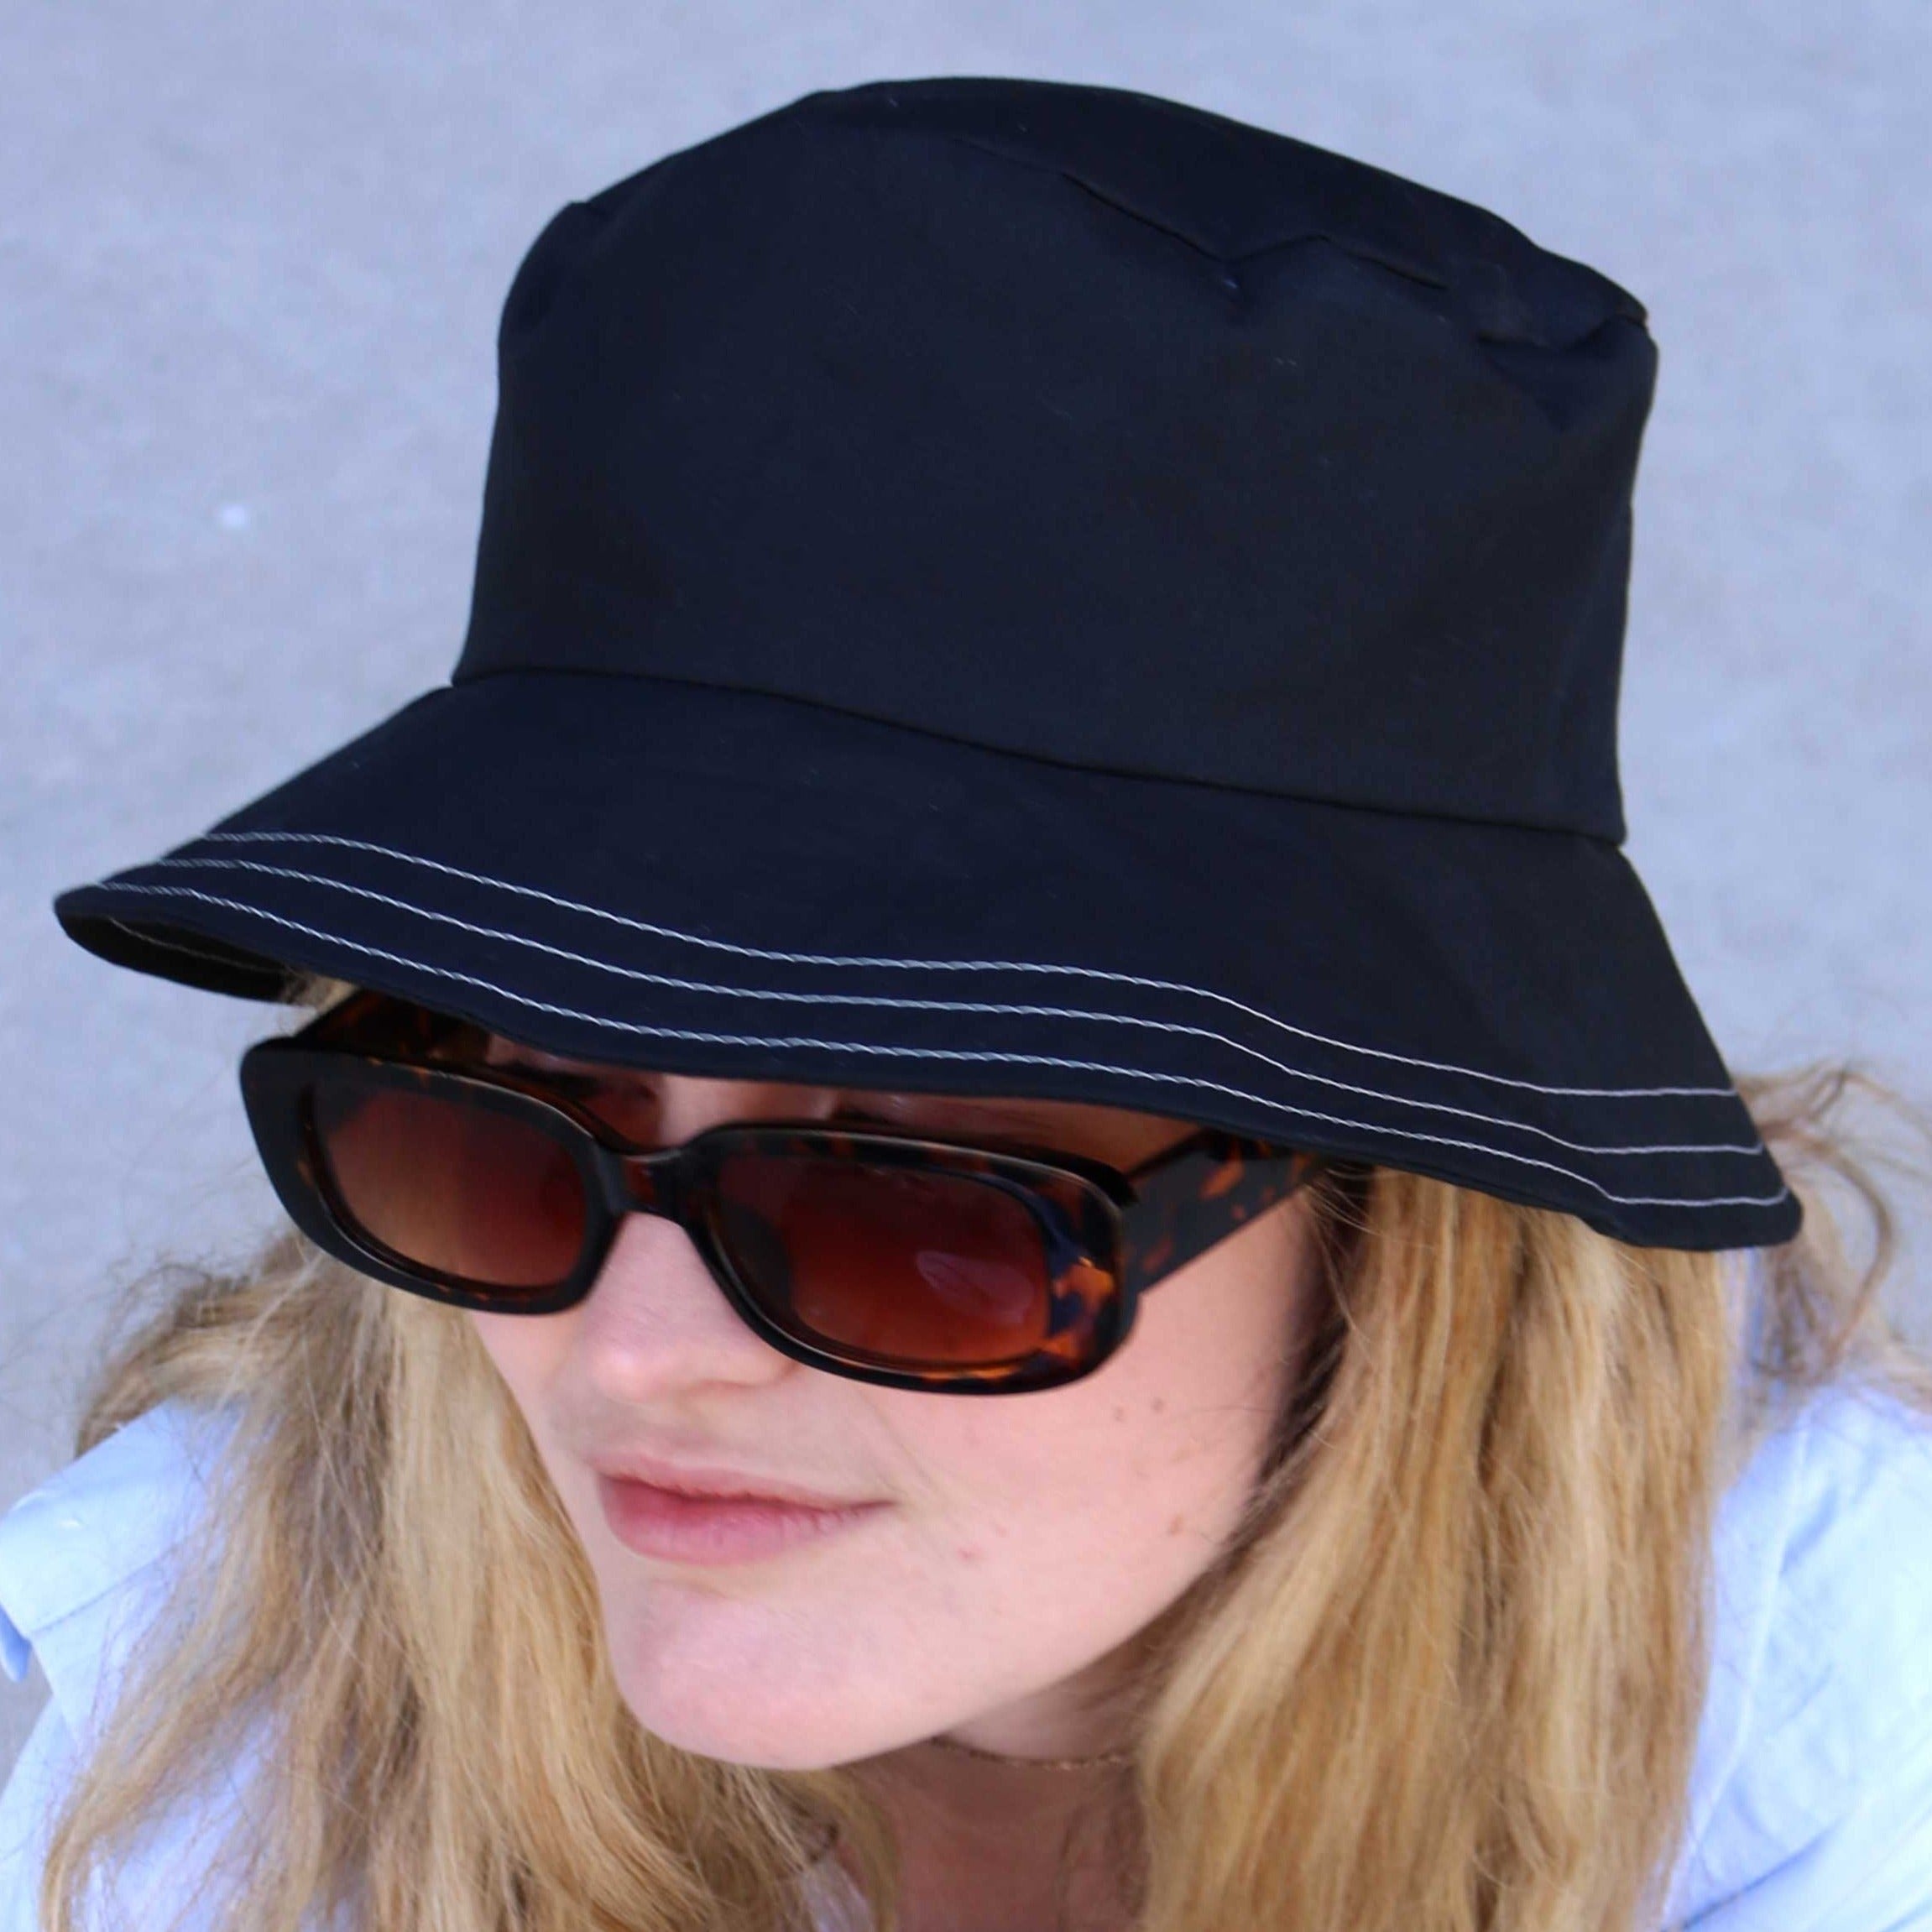 Bucket hat - Black